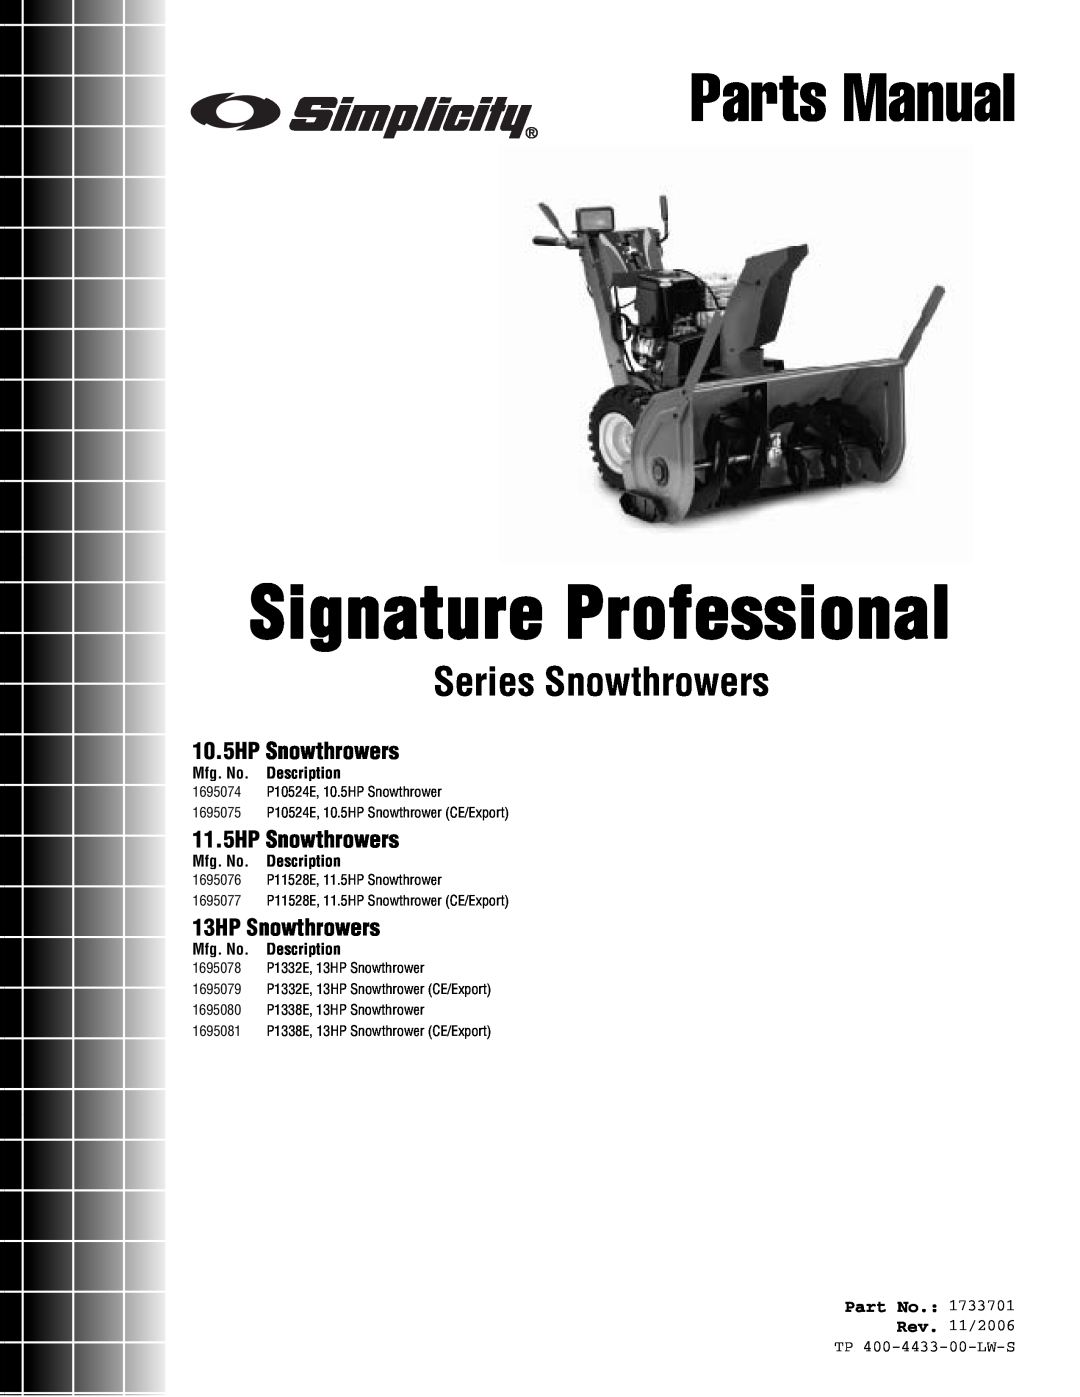 Simplicity 1695075 manual 10.5HP Snowthrowers, 11.5HP Snowthrowers, 13HP Snowthrowers, Mfg. No. Description, Parts Manual 